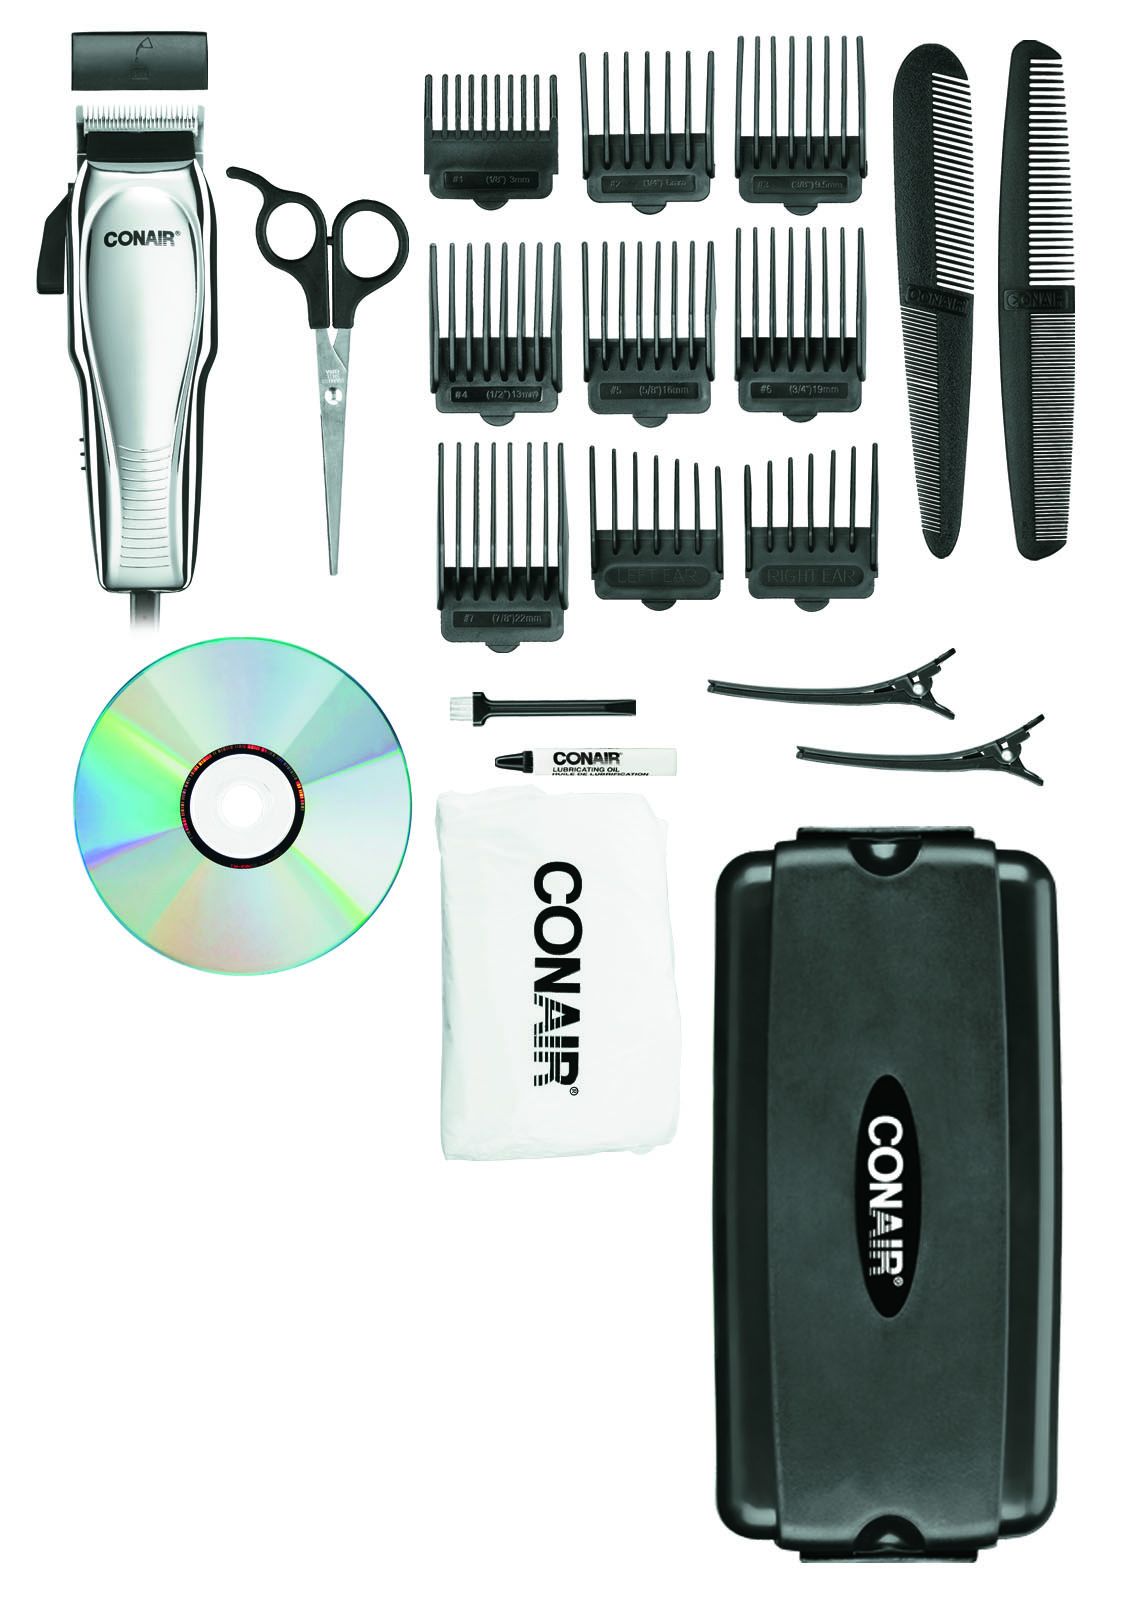 Conair 21-Piece Haircut Kit with Case